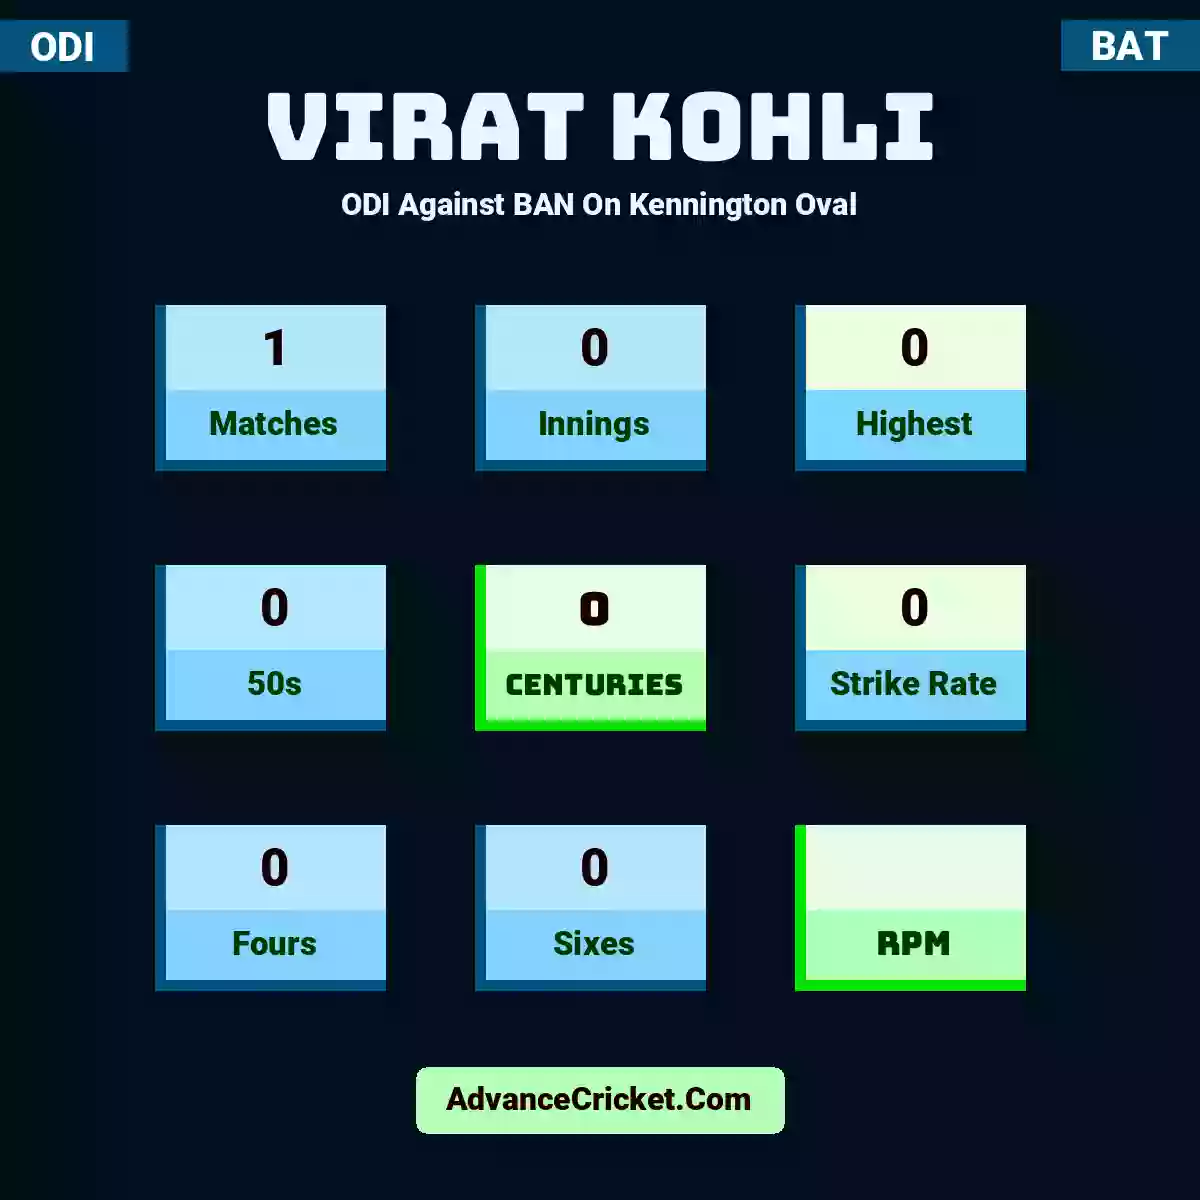 Virat Kohli ODI  Against BAN On Kennington Oval, Virat Kohli played 1 matches, scored 0 runs as highest, 0 half-centuries, and 0 centuries, with a strike rate of 0. V.Kohli hit 0 fours and 0 sixes.